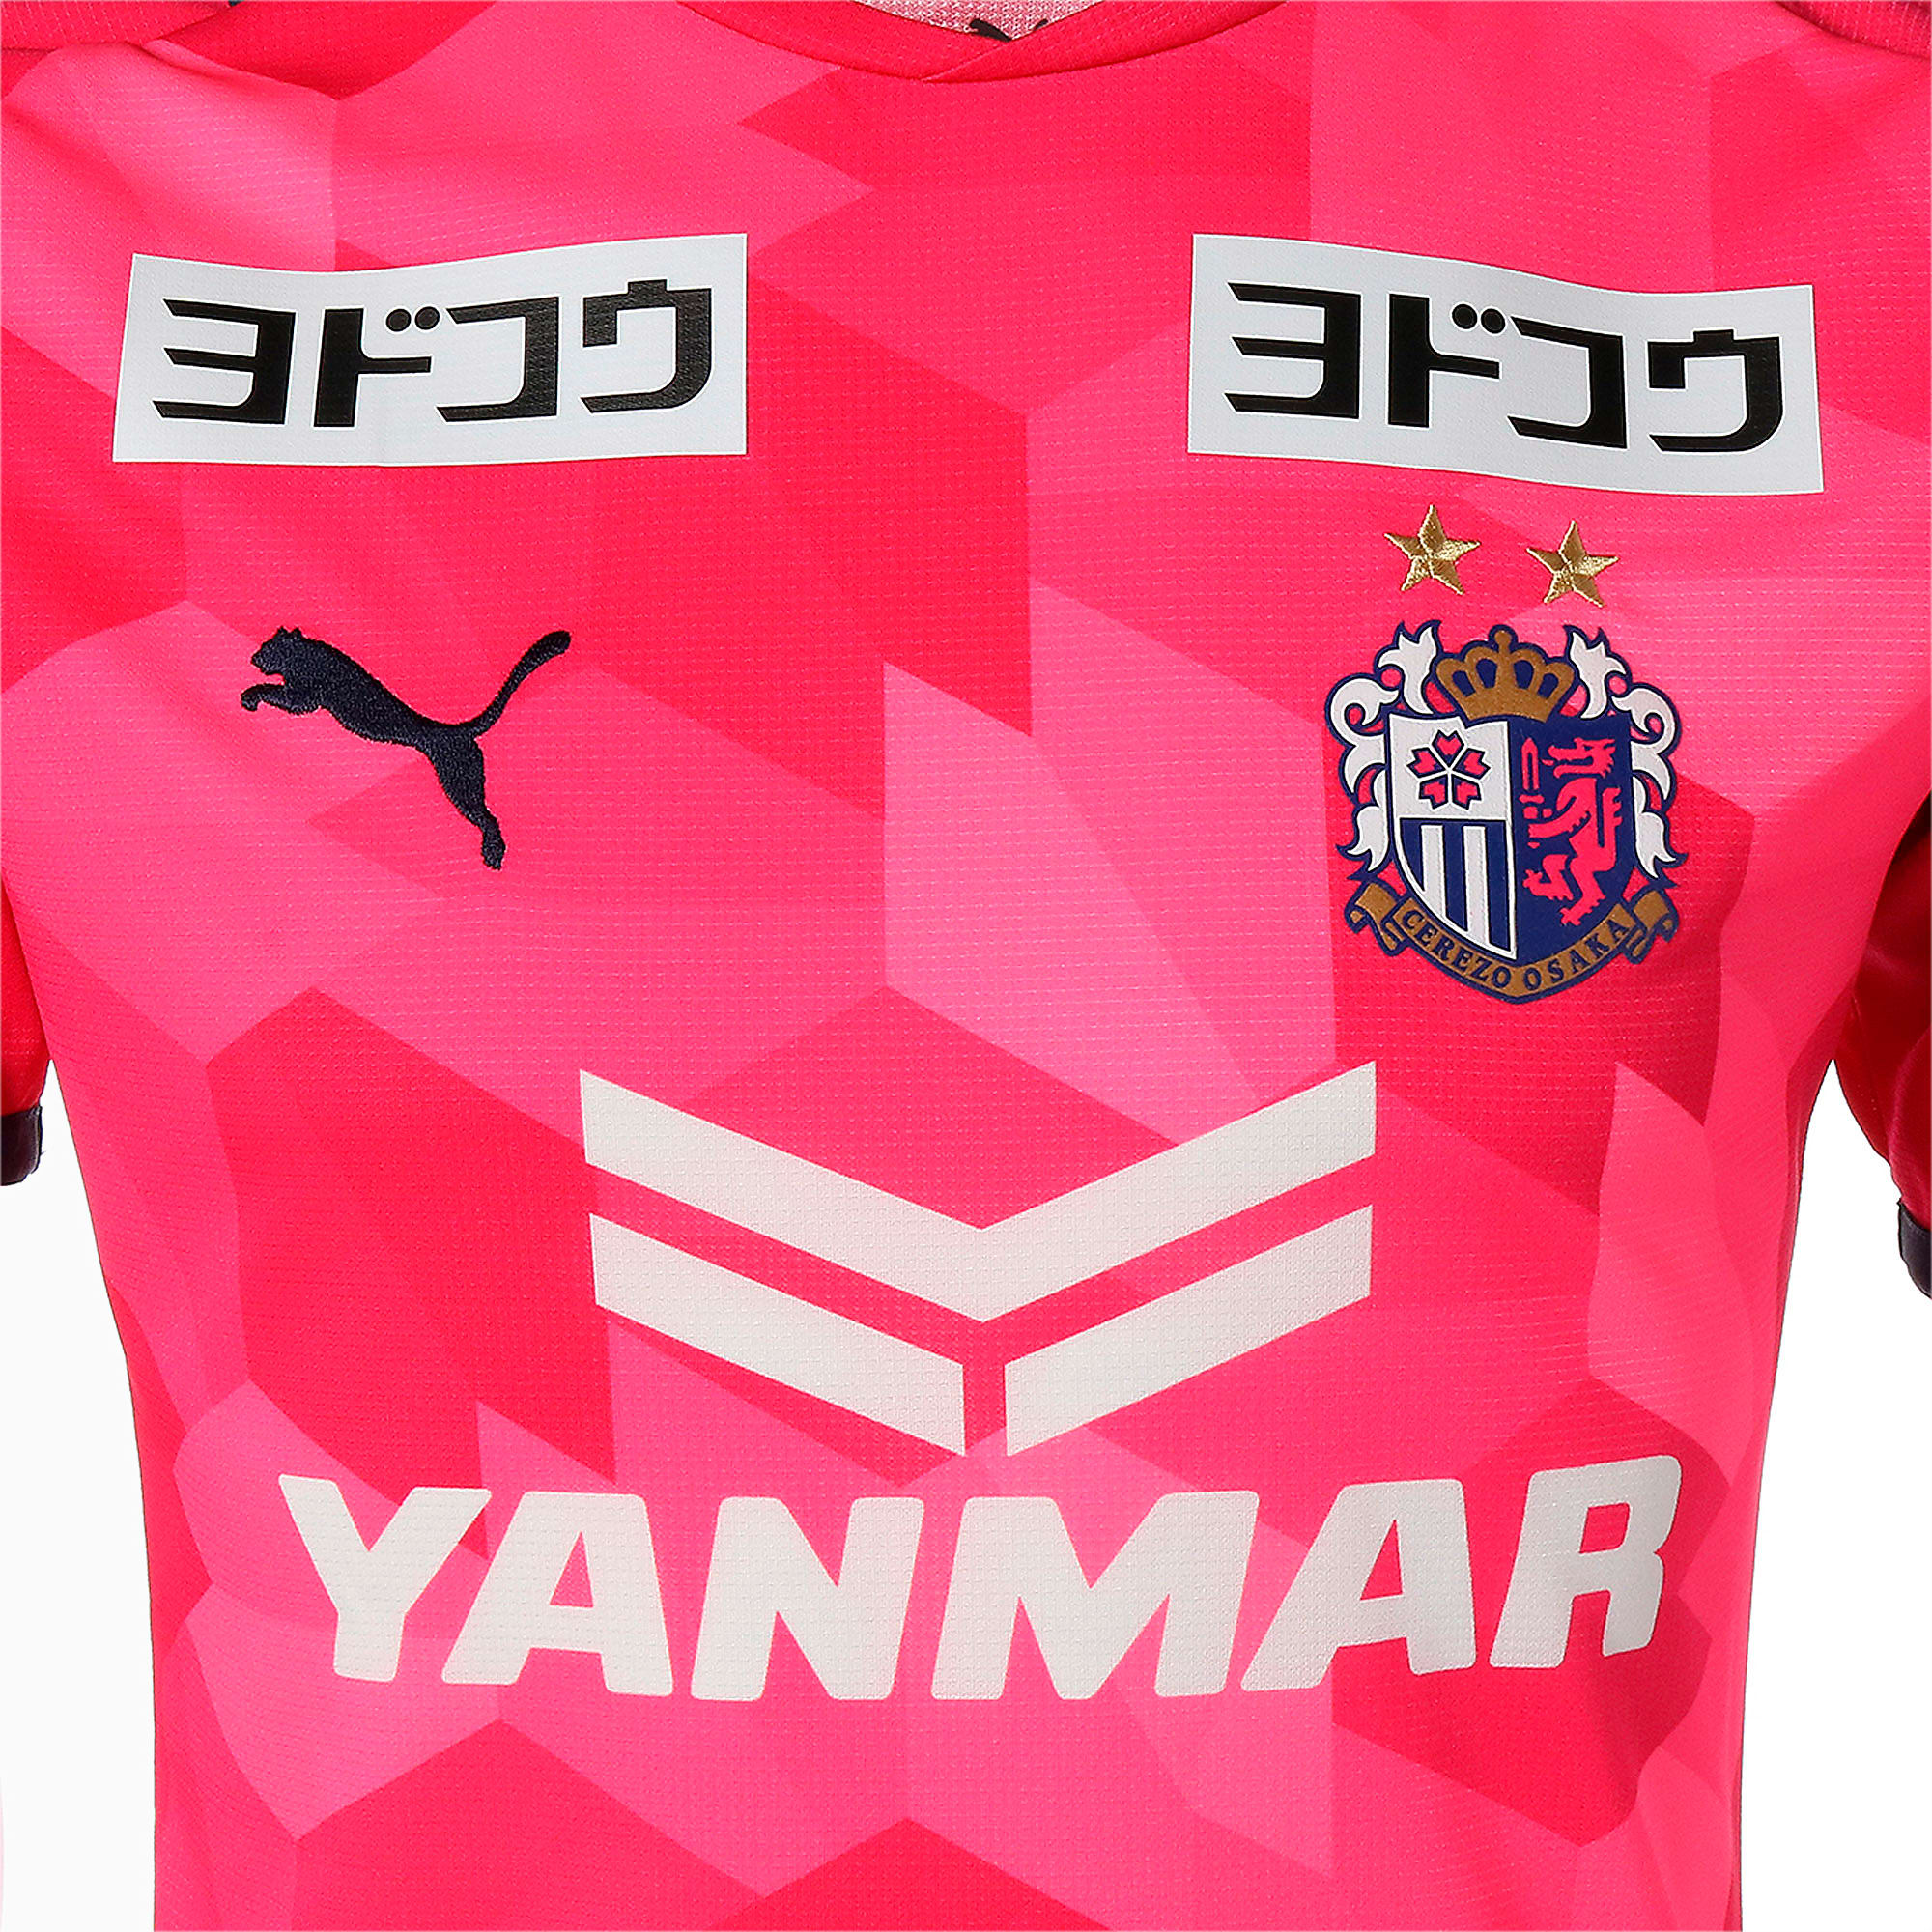 Puma公式 セレッソ大阪 21 ホーム 半袖 ゲームシャツ ユニフォーム サッカー メンズ C Pink プーマ セレッソ大阪 プーマ